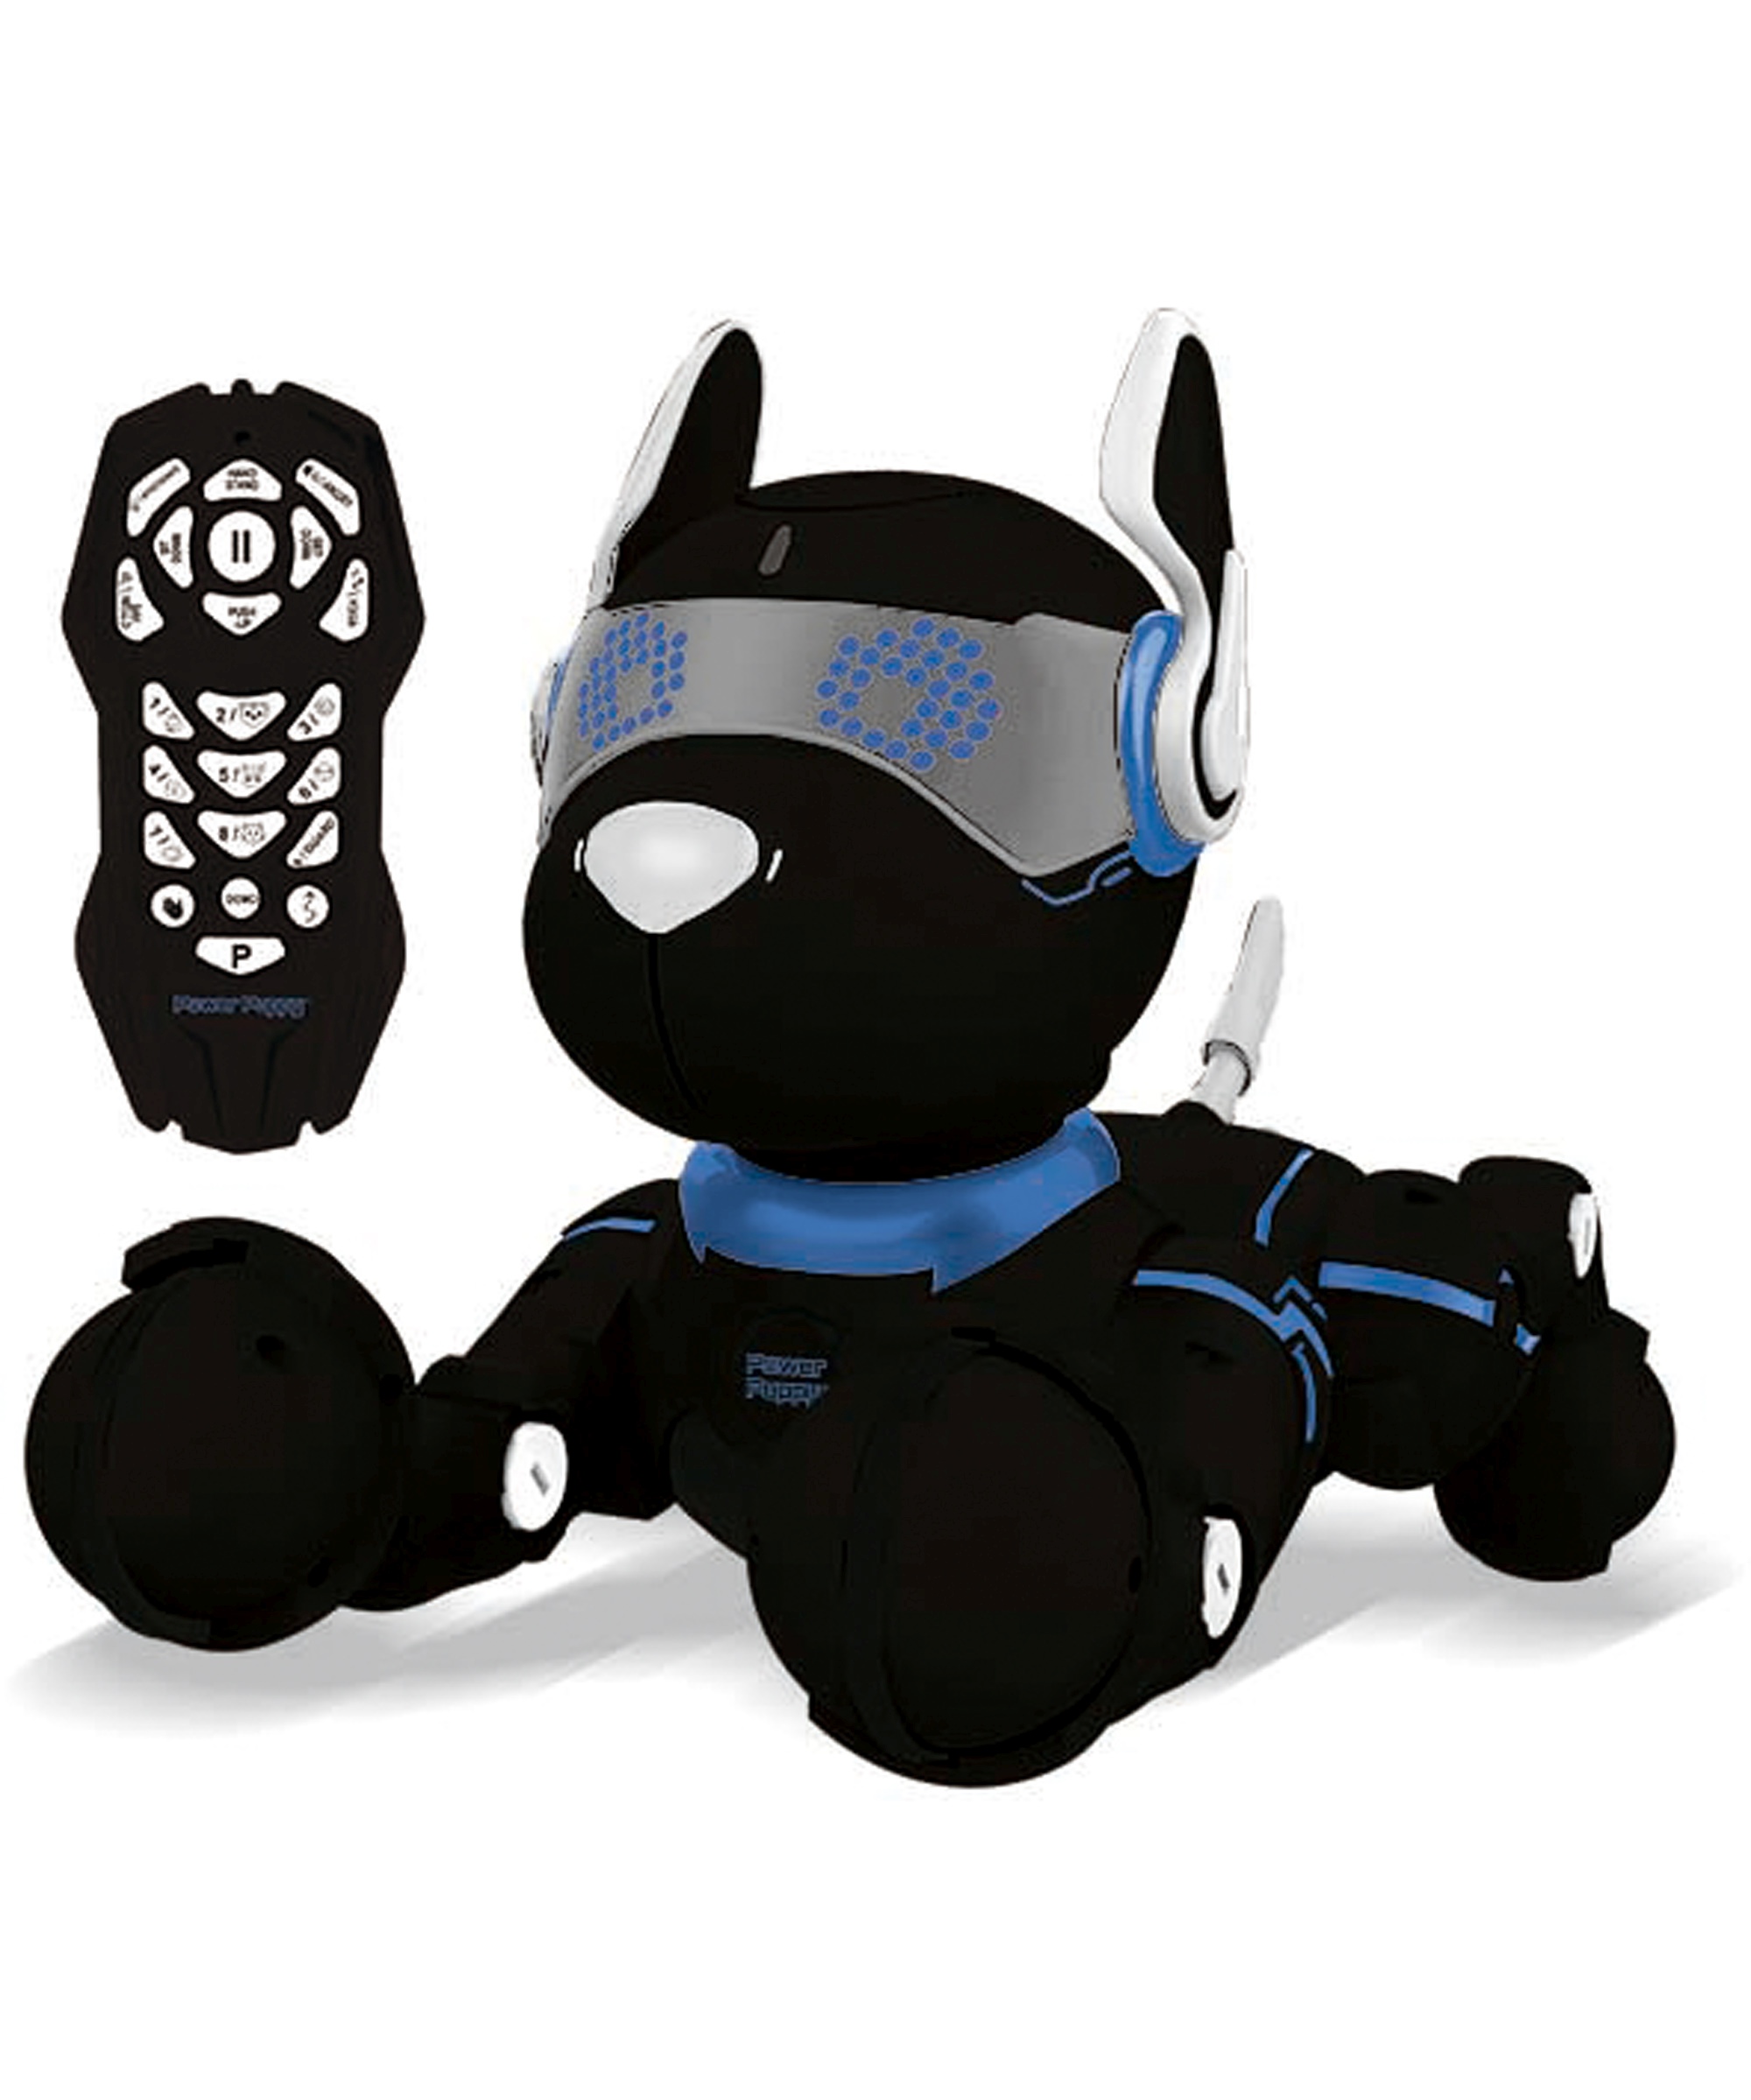 Lexibook Power Puppy Smart Robotic Dog